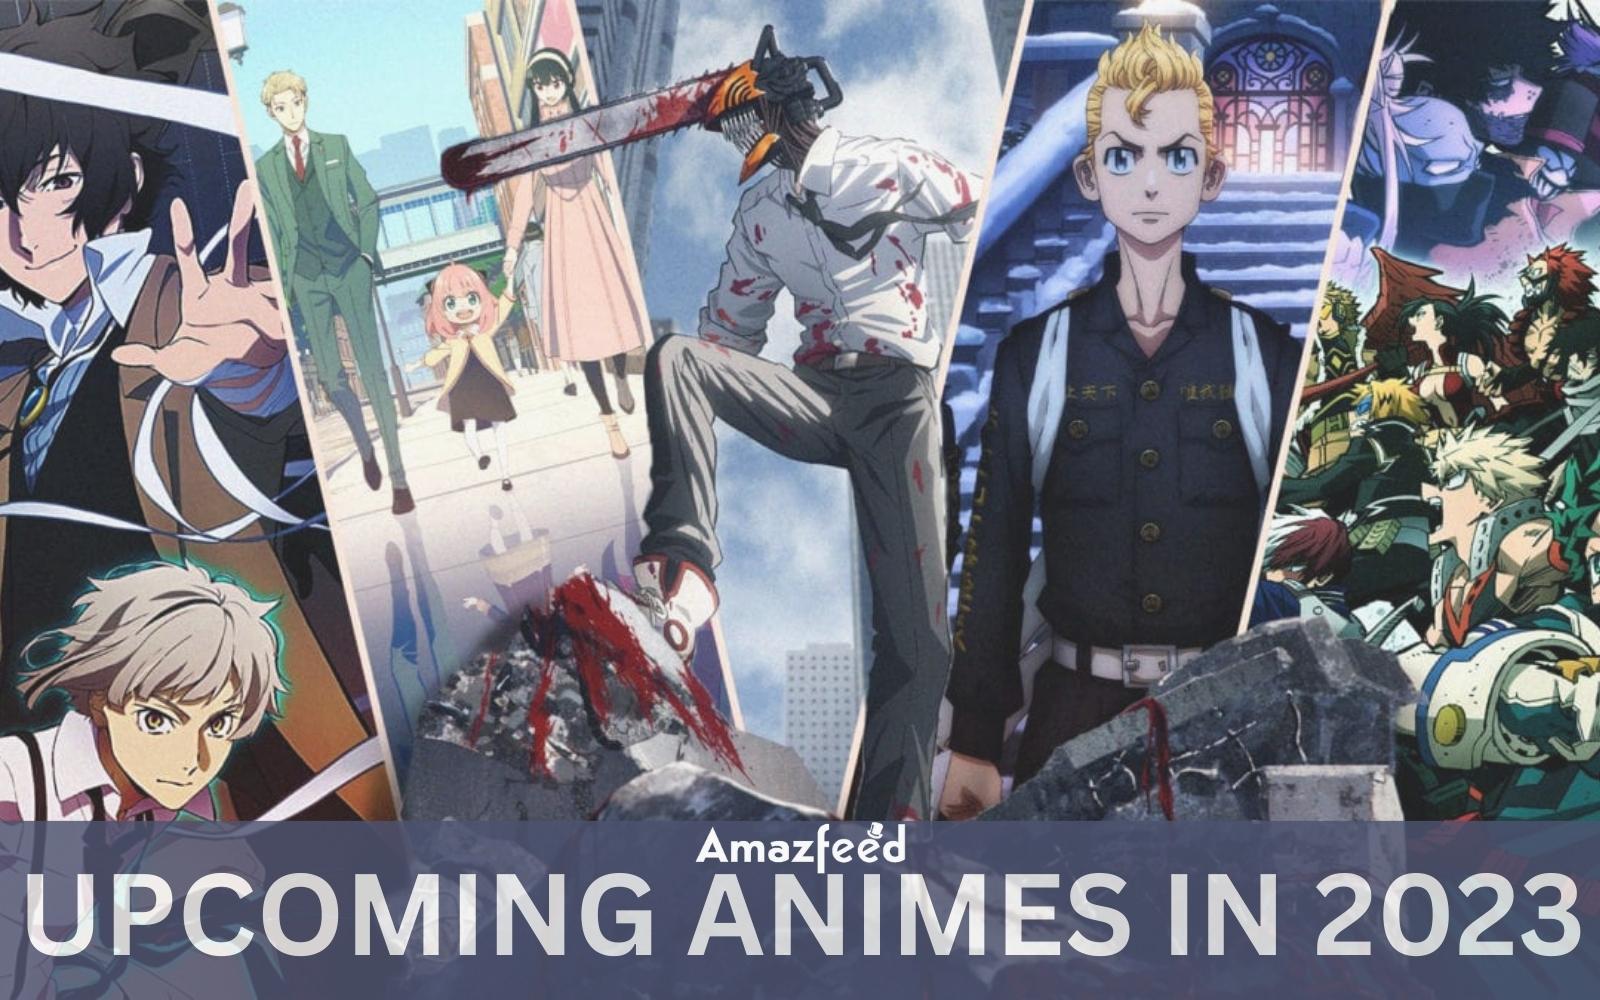 Tsurune Season 2 Anime Confirmed for January 2023 - QooApp News